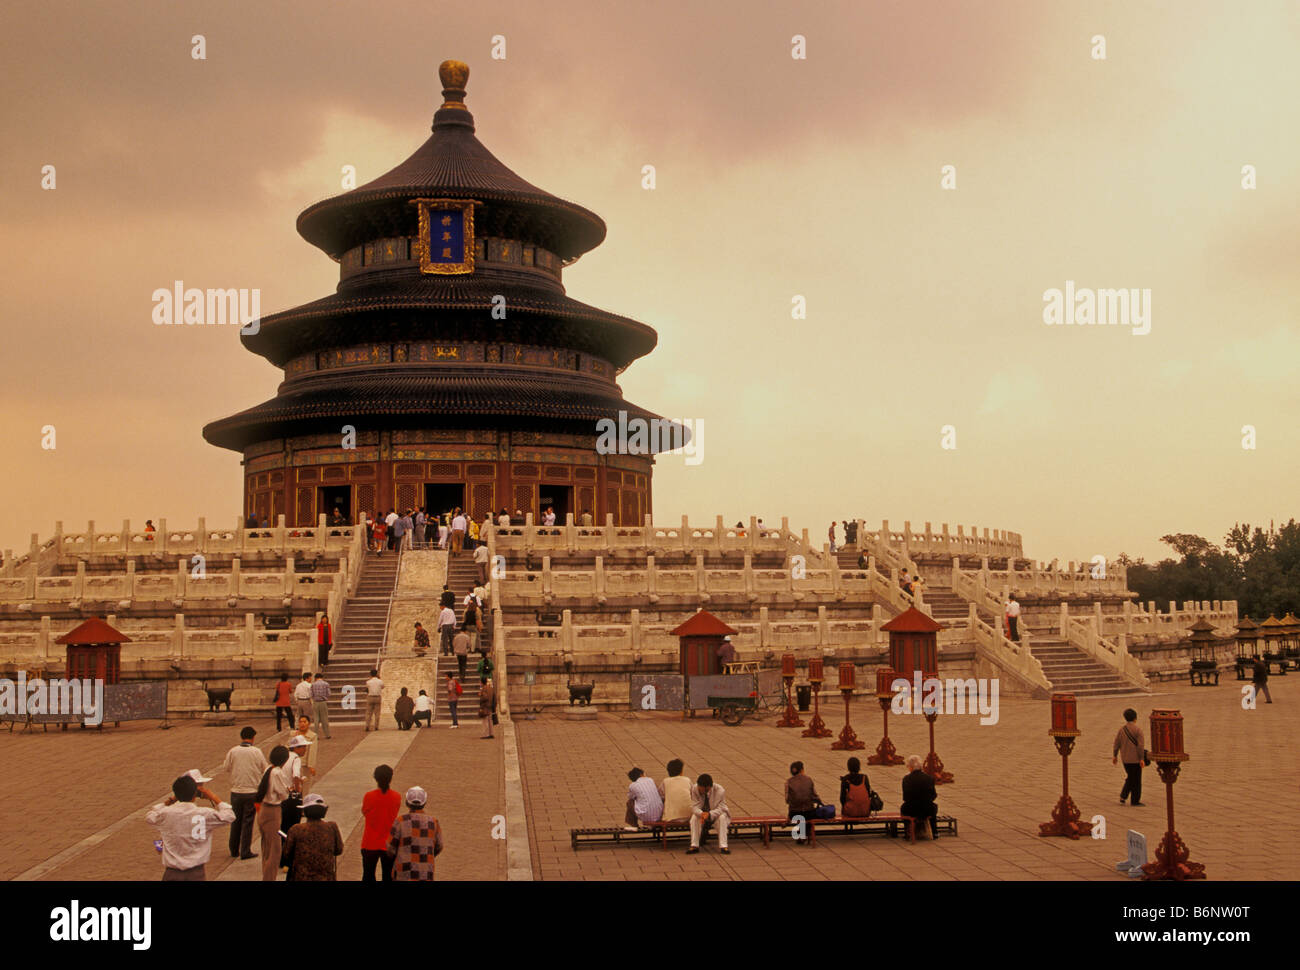 Hall of Prayer for Good Harvests, Temple of Heaven Park, Tiantan Park, Qinian Dian, Beijing, Beijing Municipality, China, Asia Stock Photo